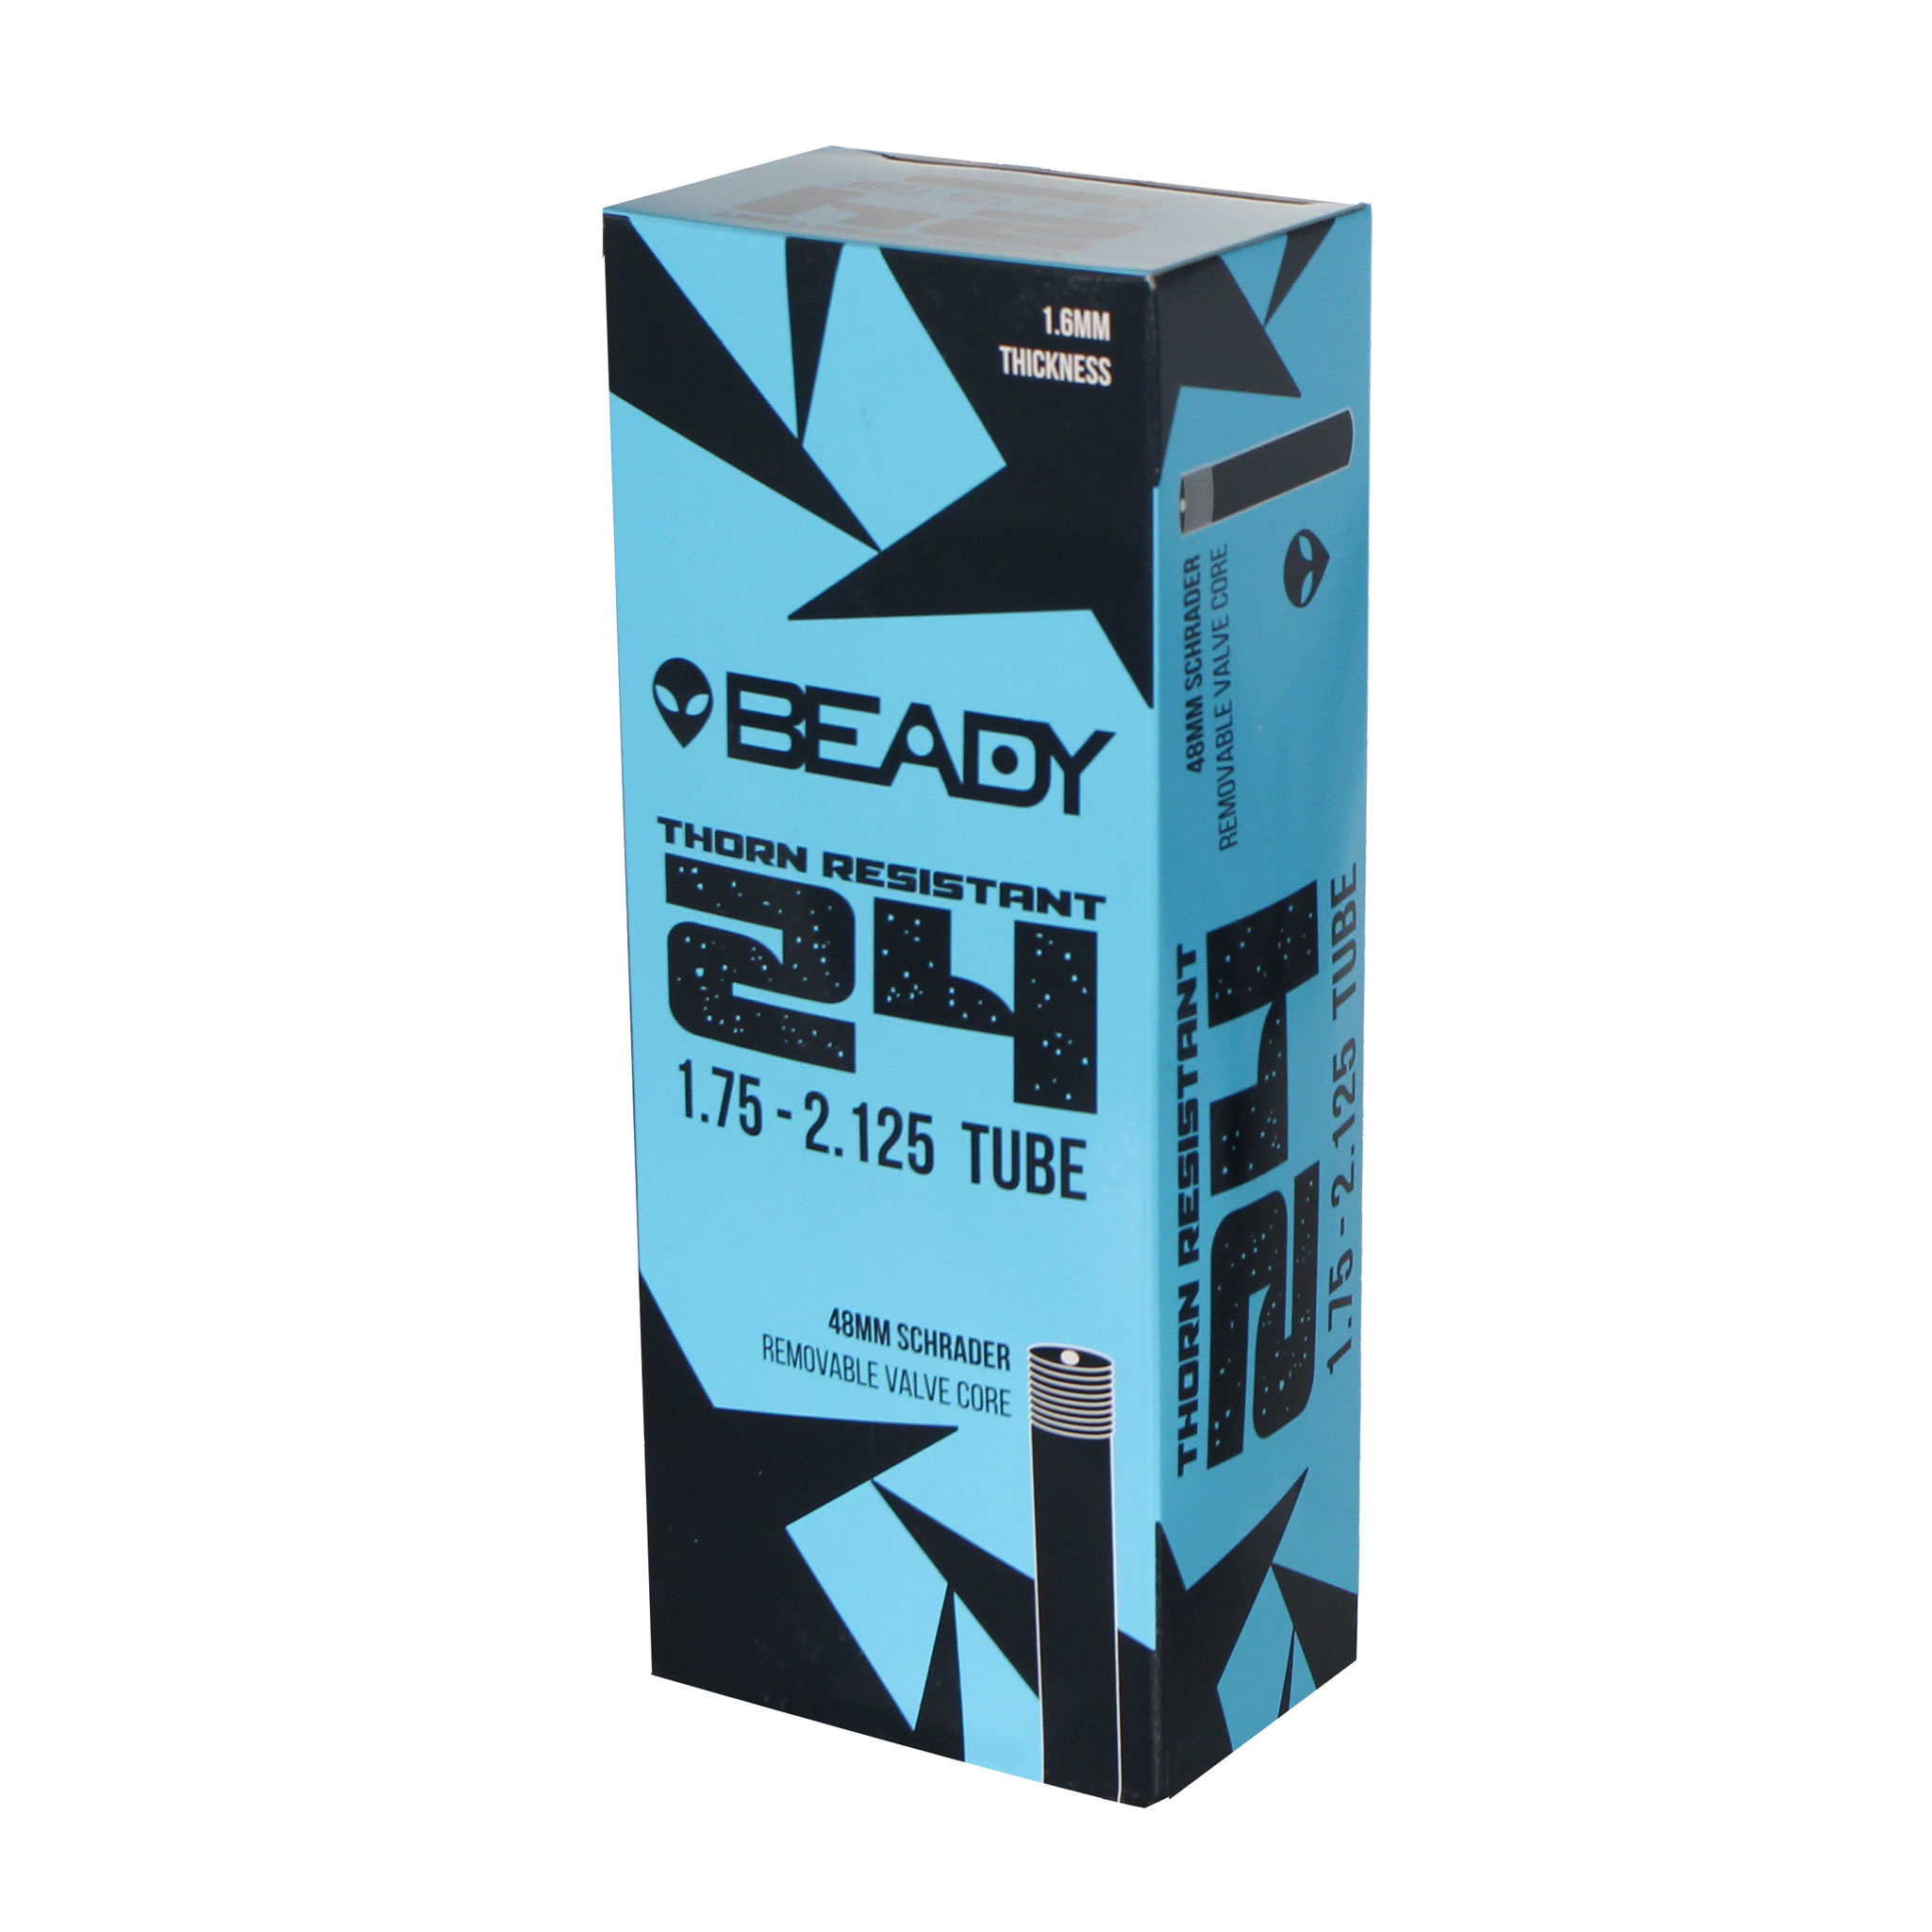 Beady Thorn Resistant Tube, 24x1.75-2.125" SV 48mm